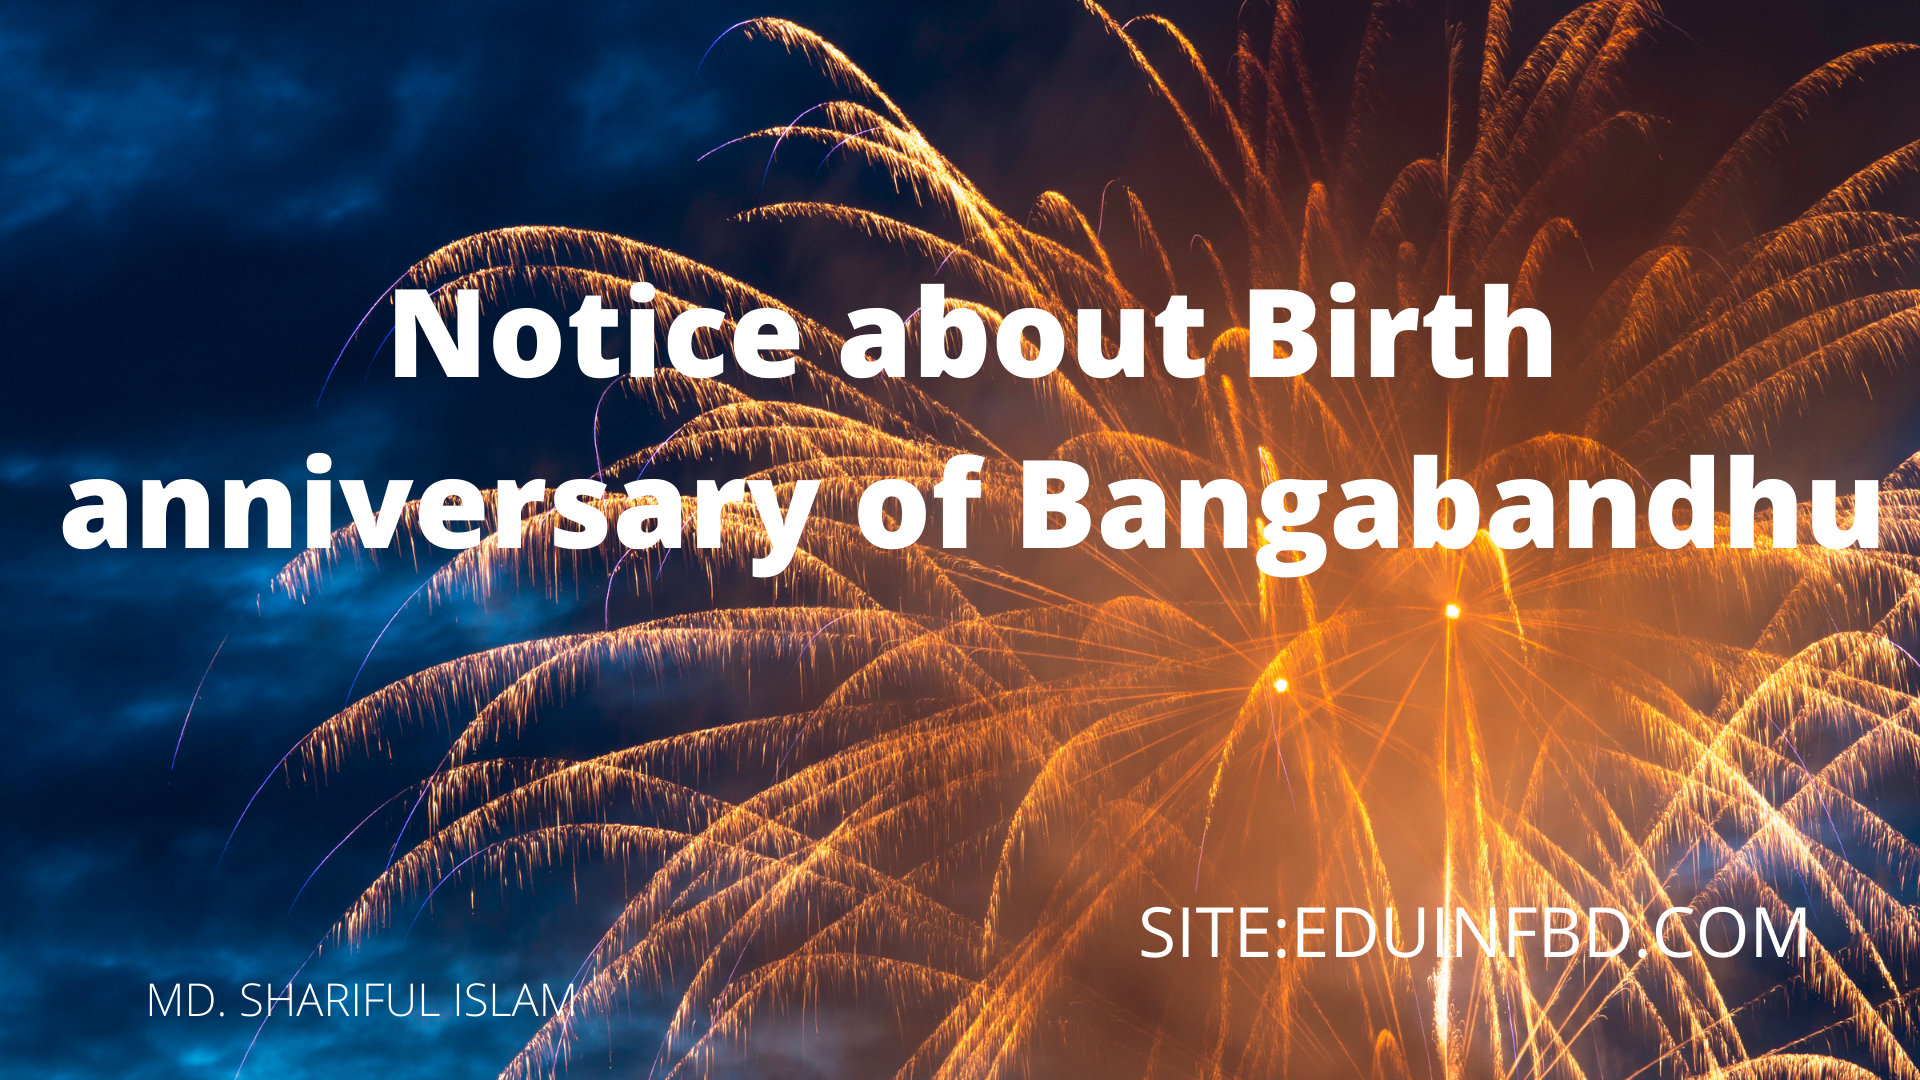 Notice about Birth anniversary of Bangabandhu